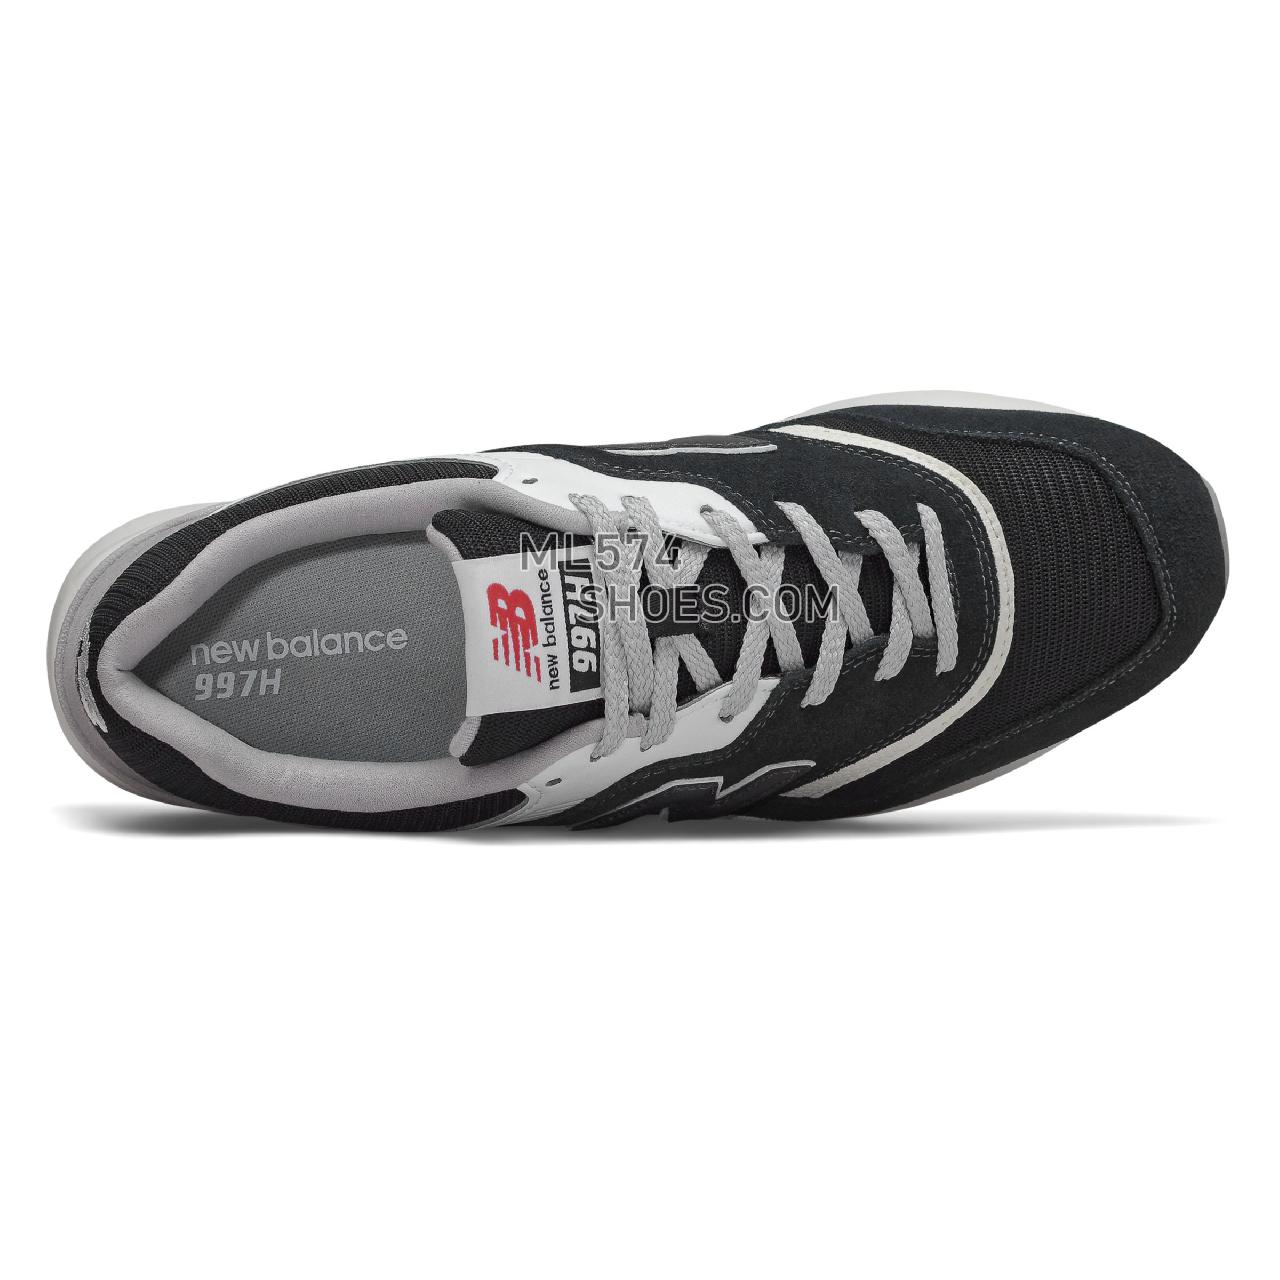 New Balance 997H - Men's Classic Sneakers - Black with Rain Cloud - CM997HDR